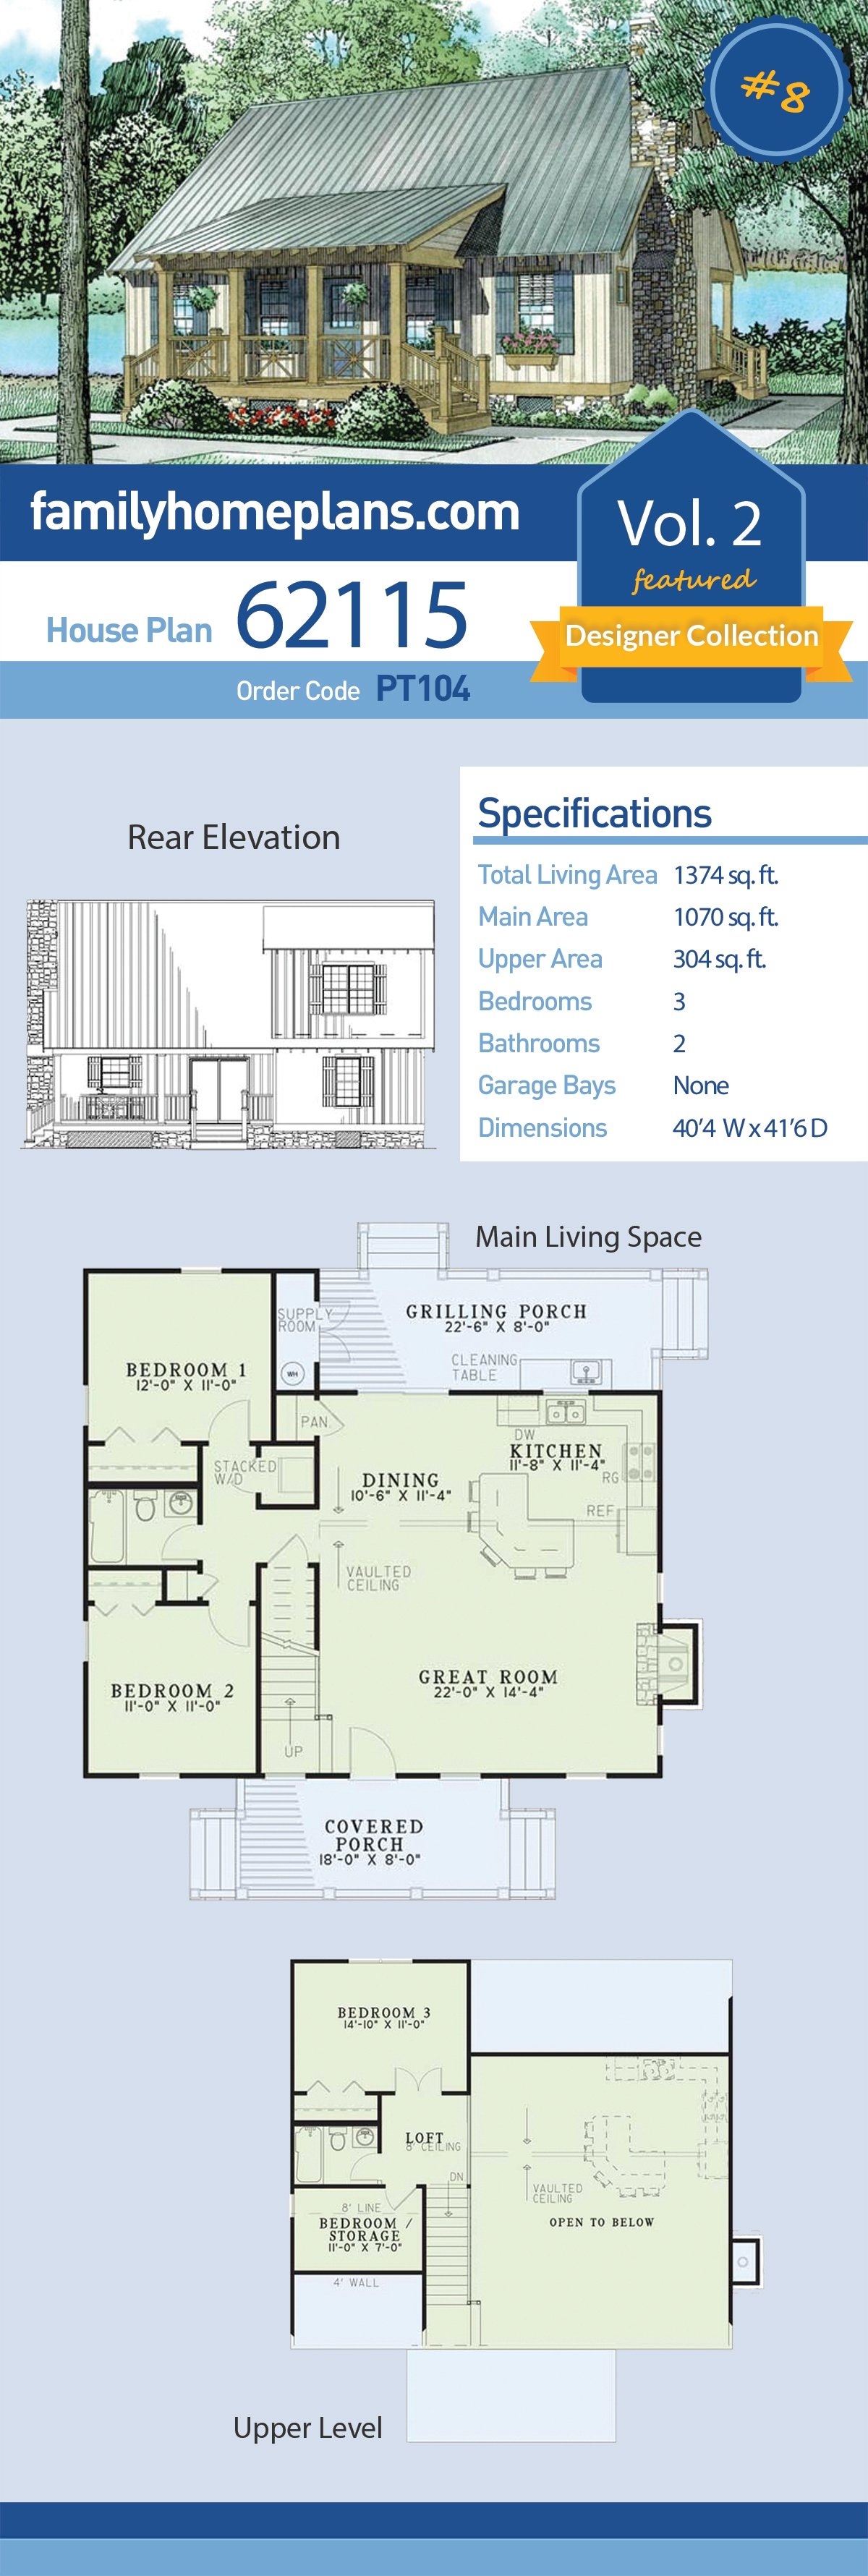 House Plan 62115